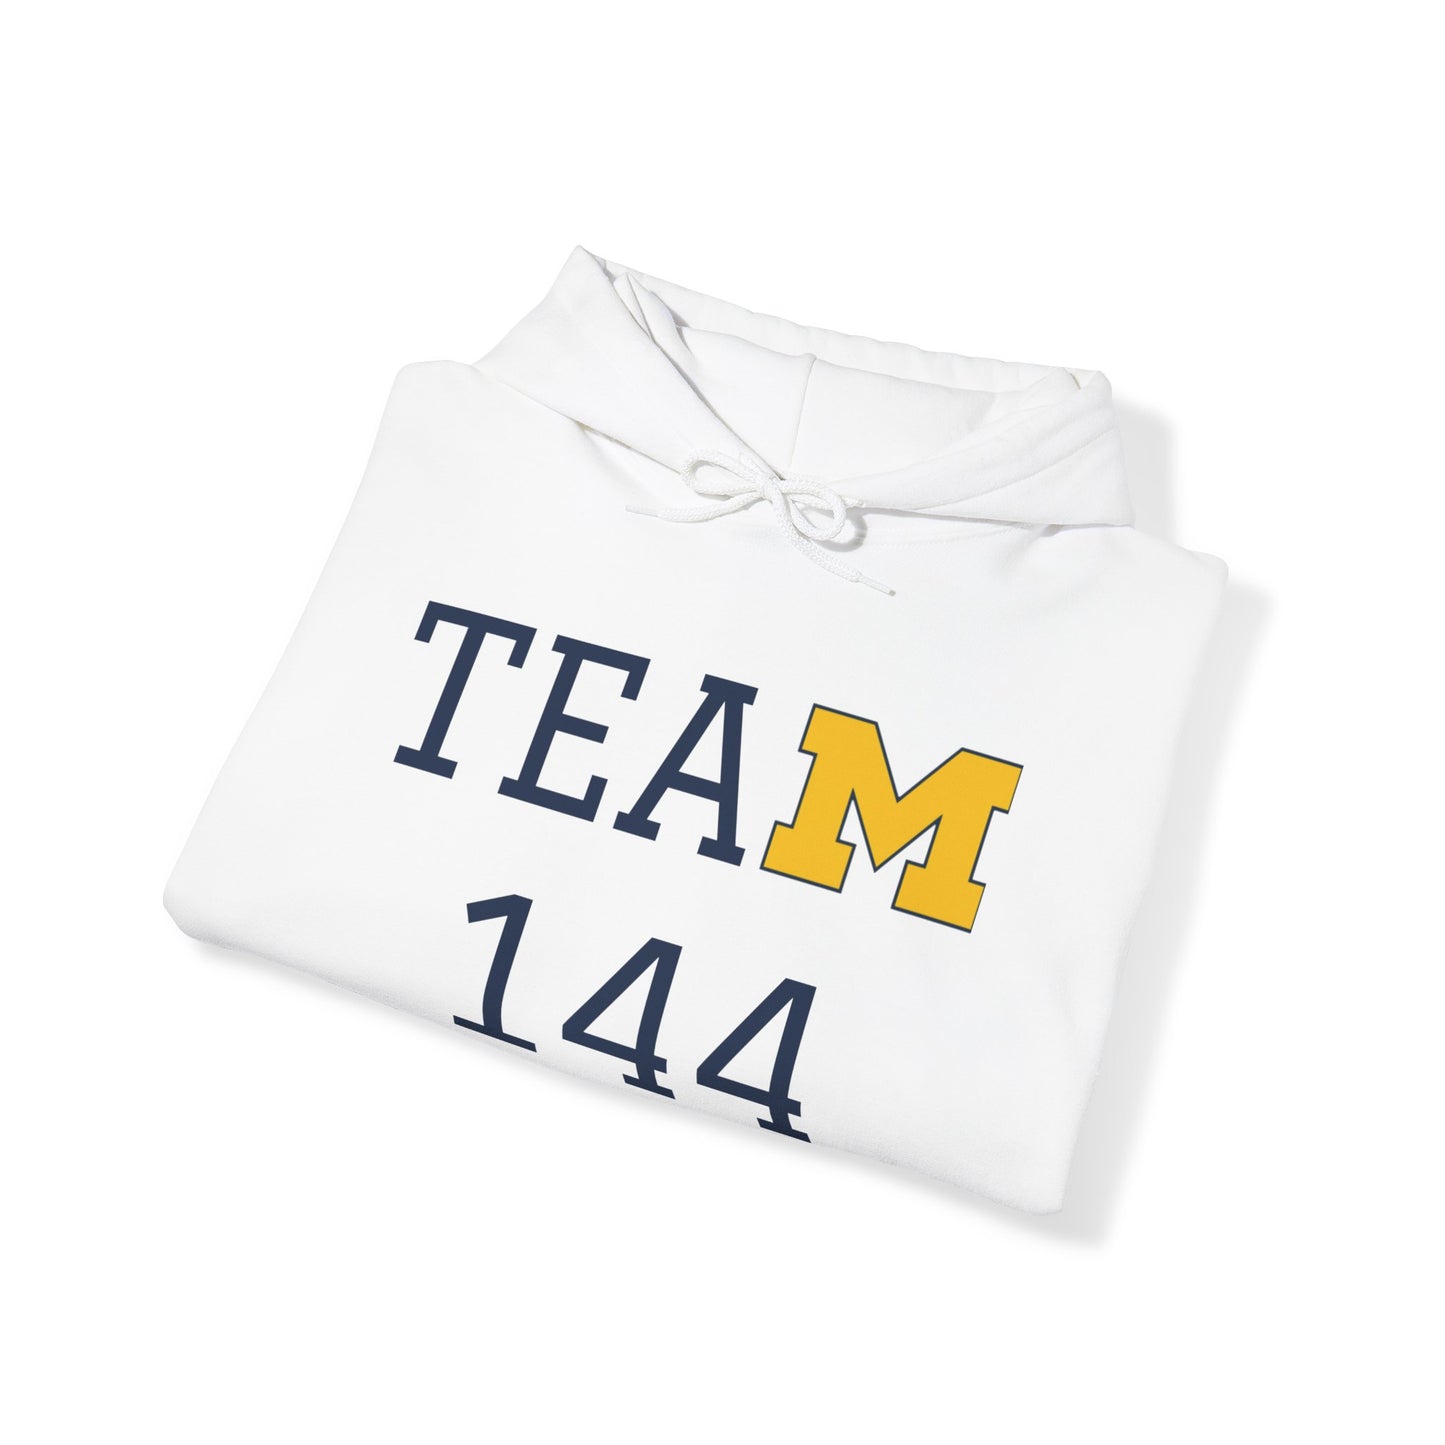 Michigan Team 144 - Cozy Comfort Unisex Heavy Blend Hooded Sweatshirt: Warmth Meets Style